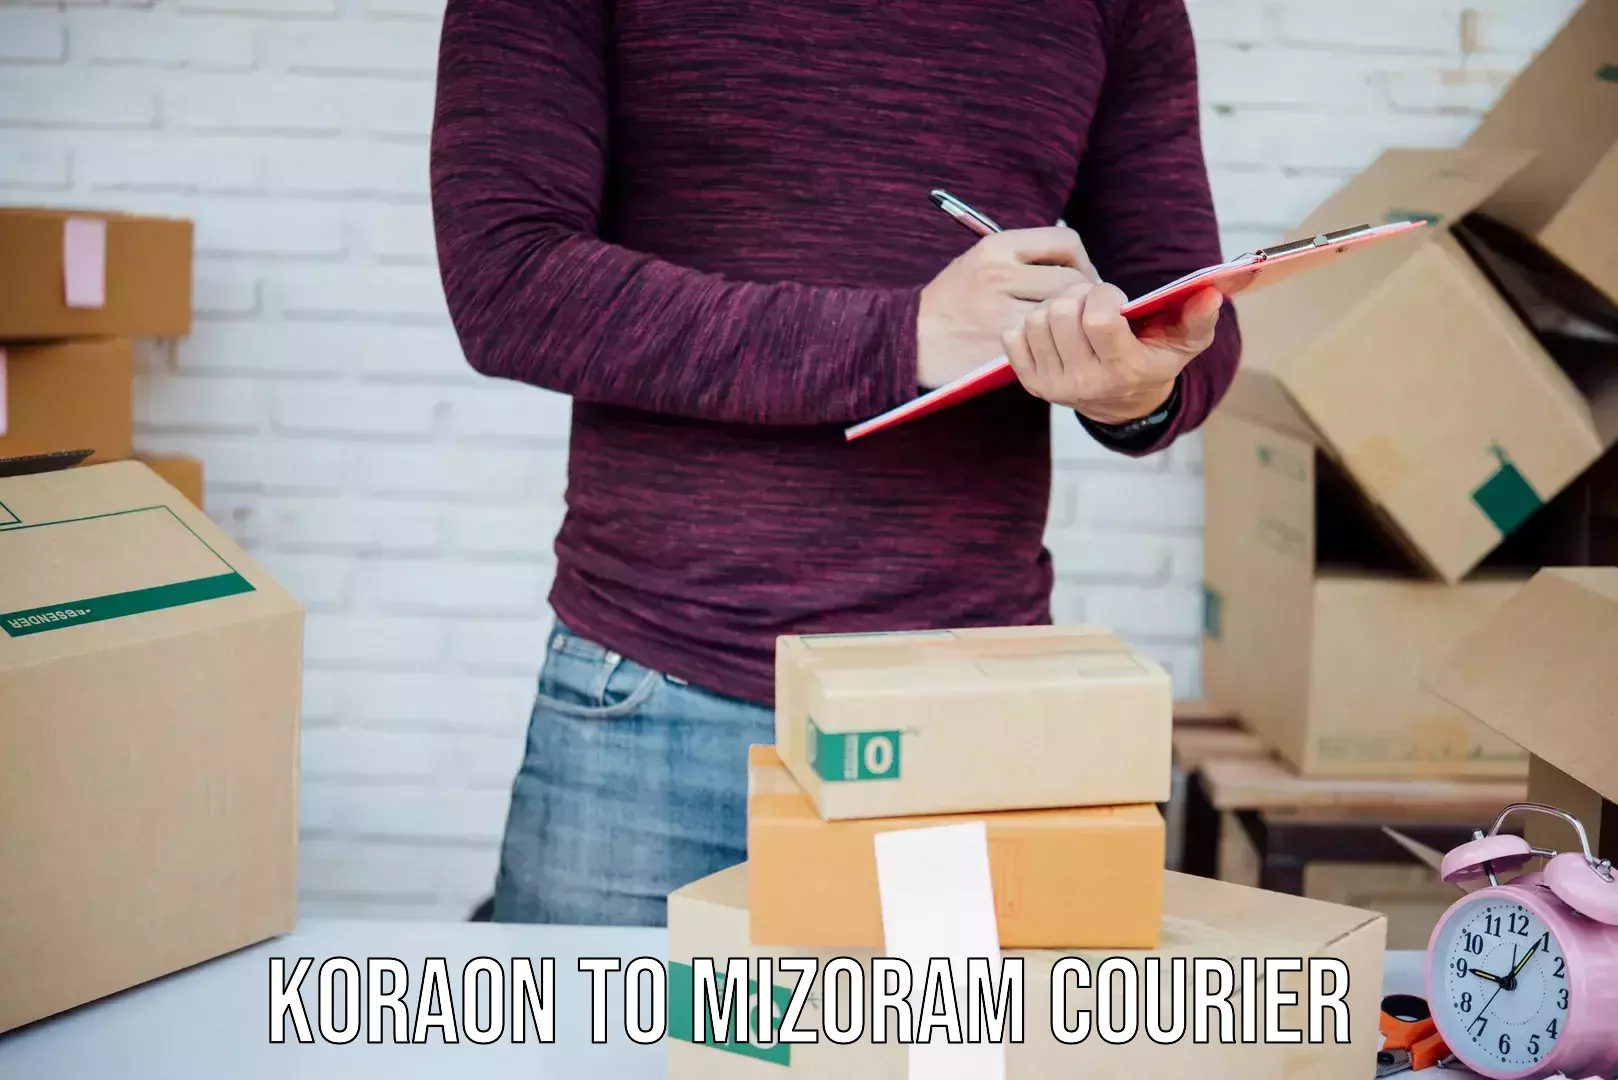 Courier service comparison Koraon to Mizoram